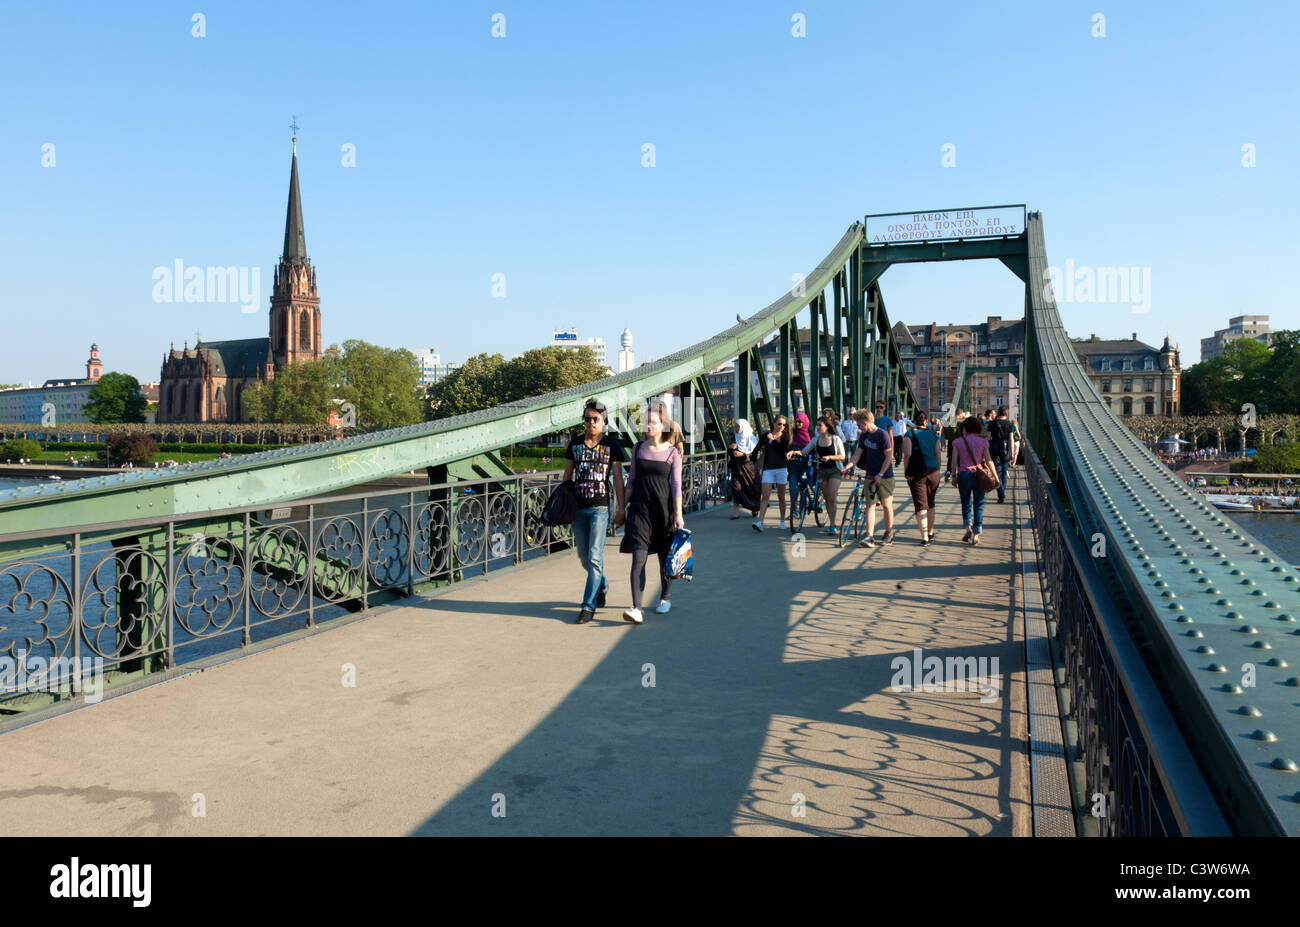 The Eiserner Steg in Frankfurt, a popular pedestrian bridge over the river Main. Stock Photo